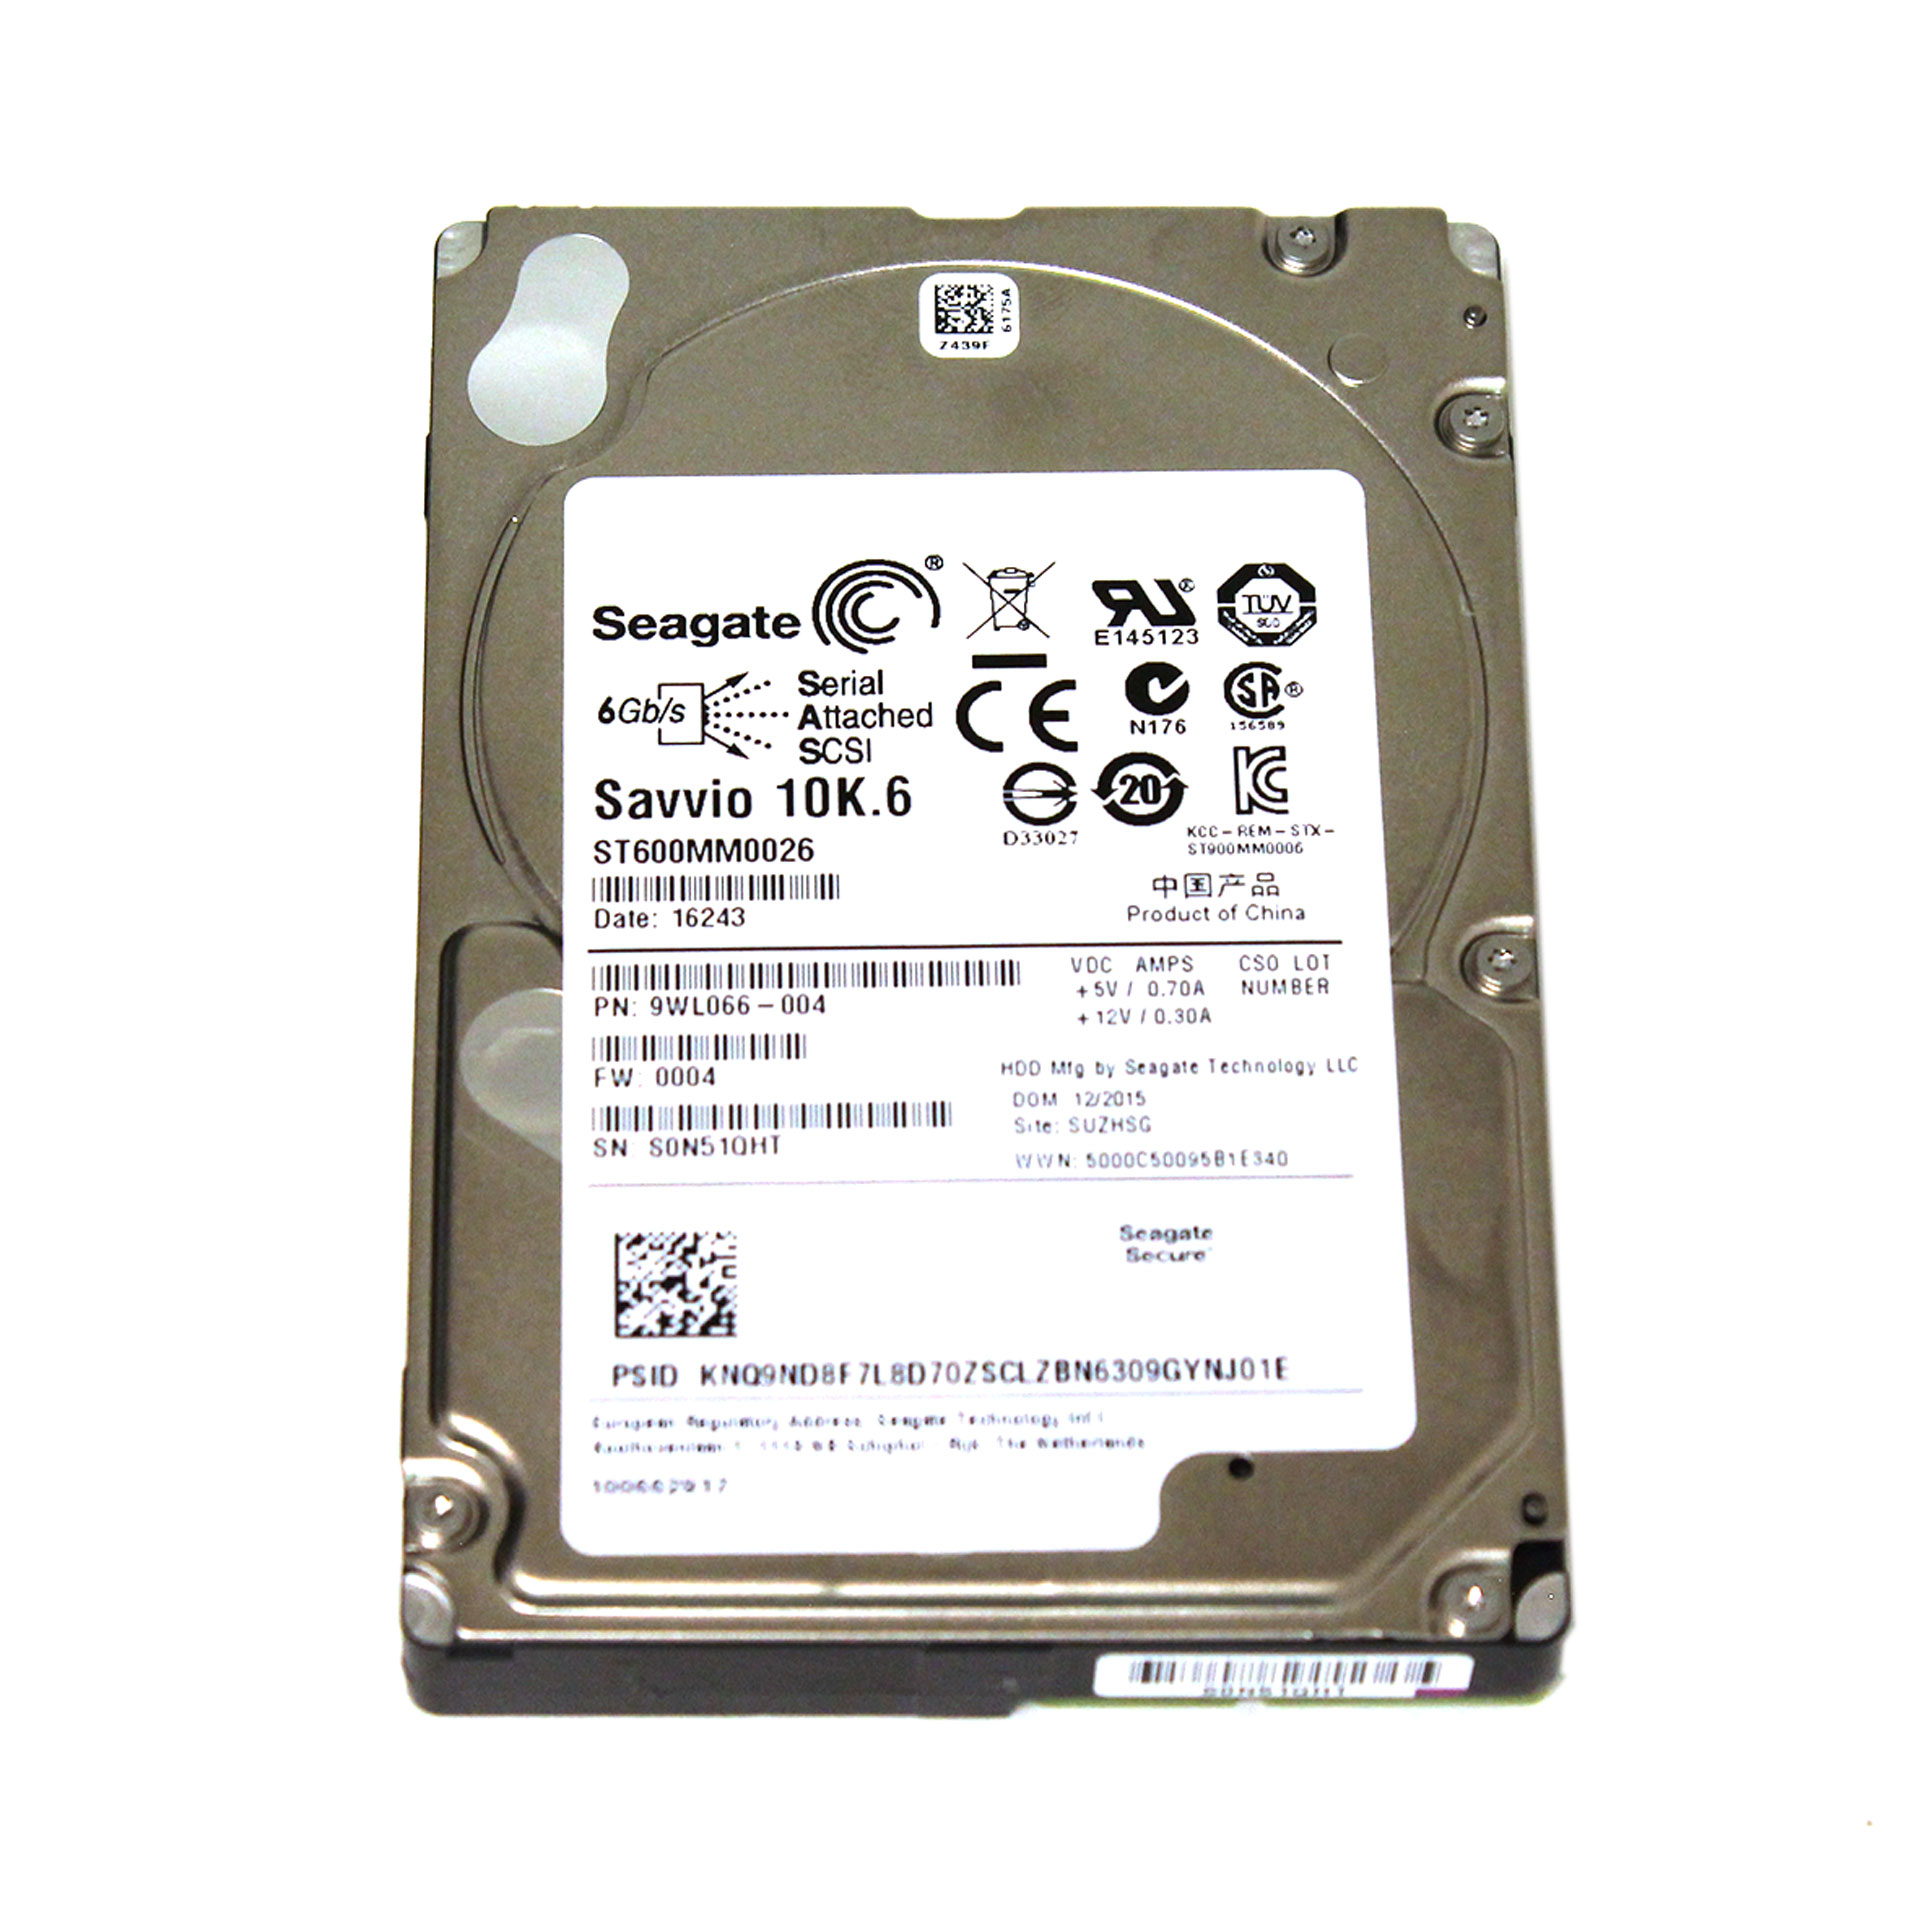 Seagate Enterprise Performance 10K HDD ST600MM0026 9WL066-004